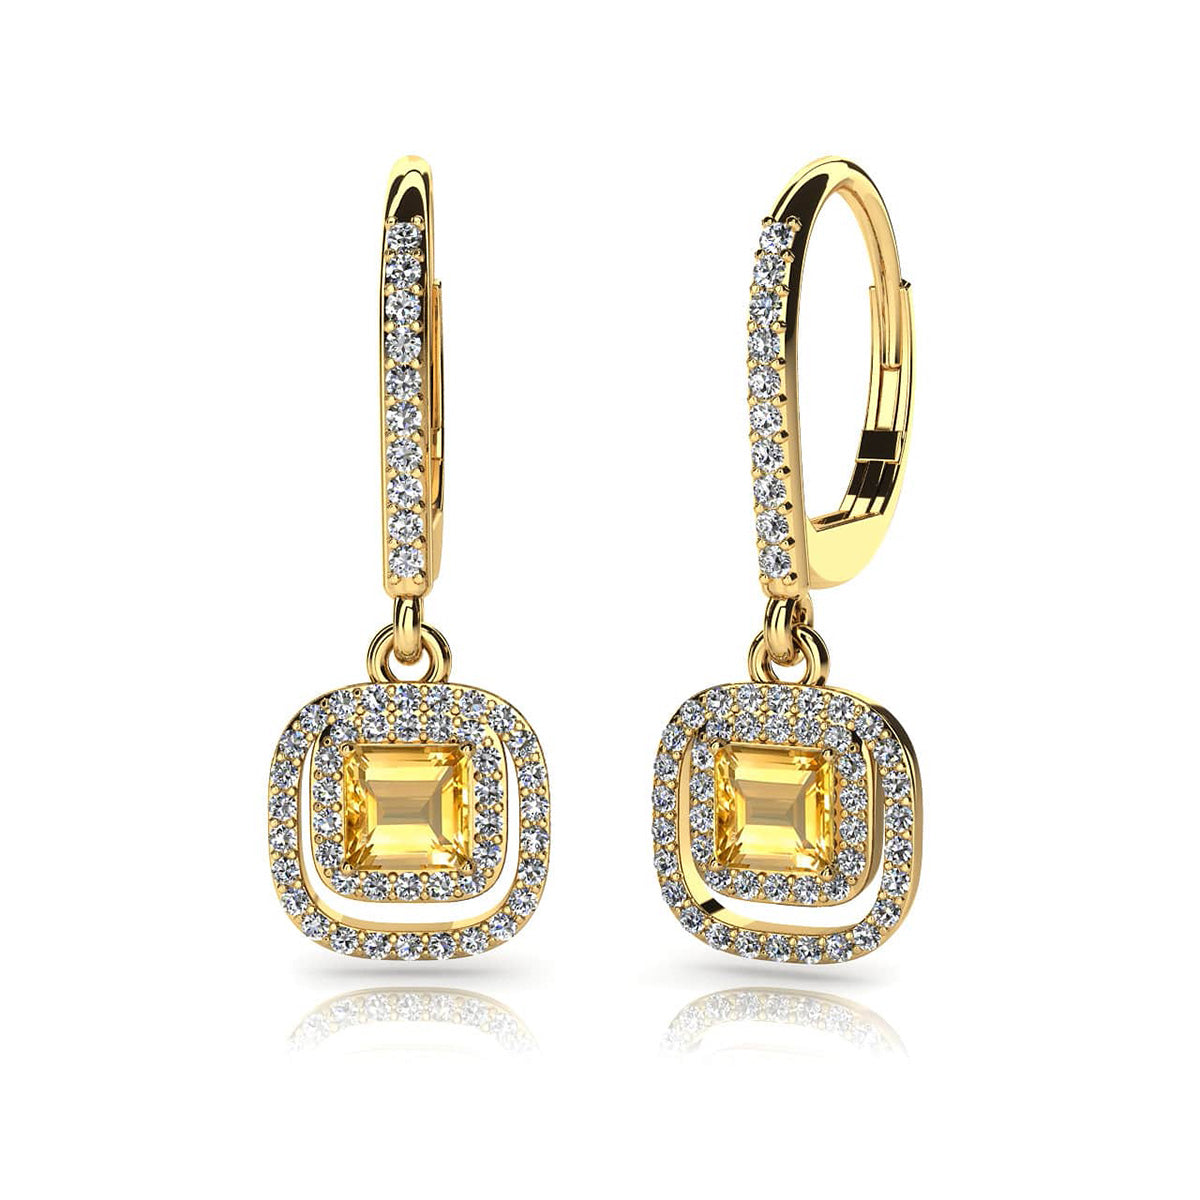 Day To Night Gemstone And Diamond Earrings